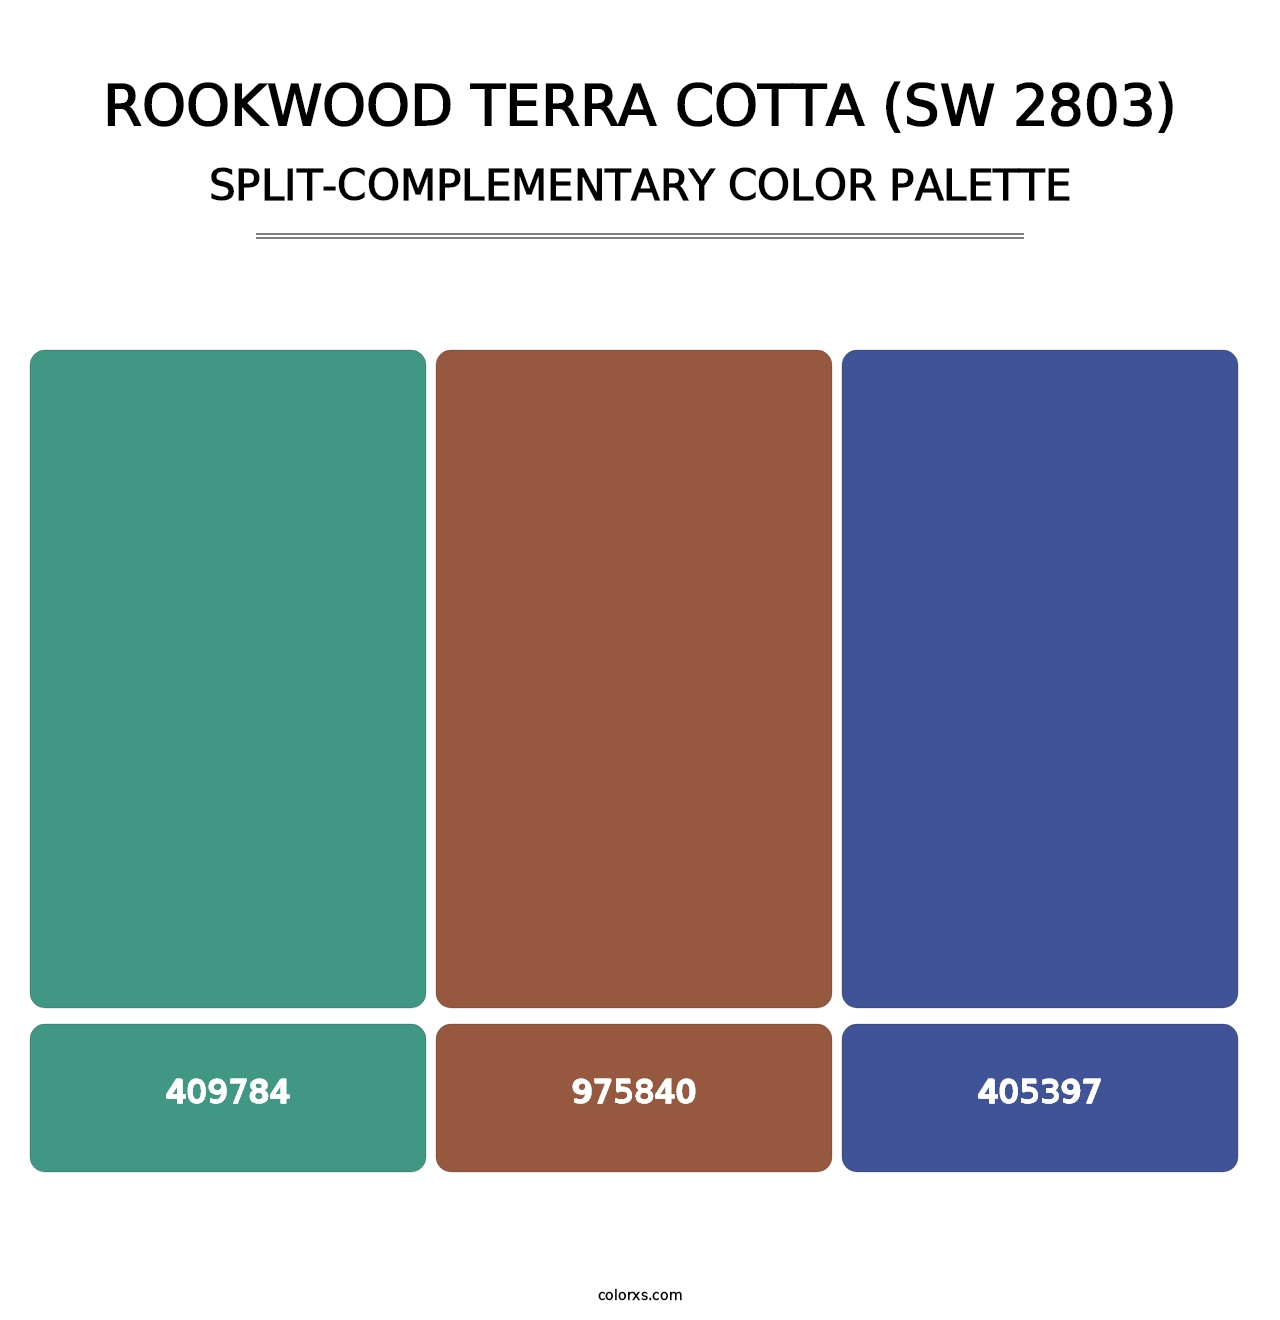 Rookwood Terra Cotta (SW 2803) - Split-Complementary Color Palette